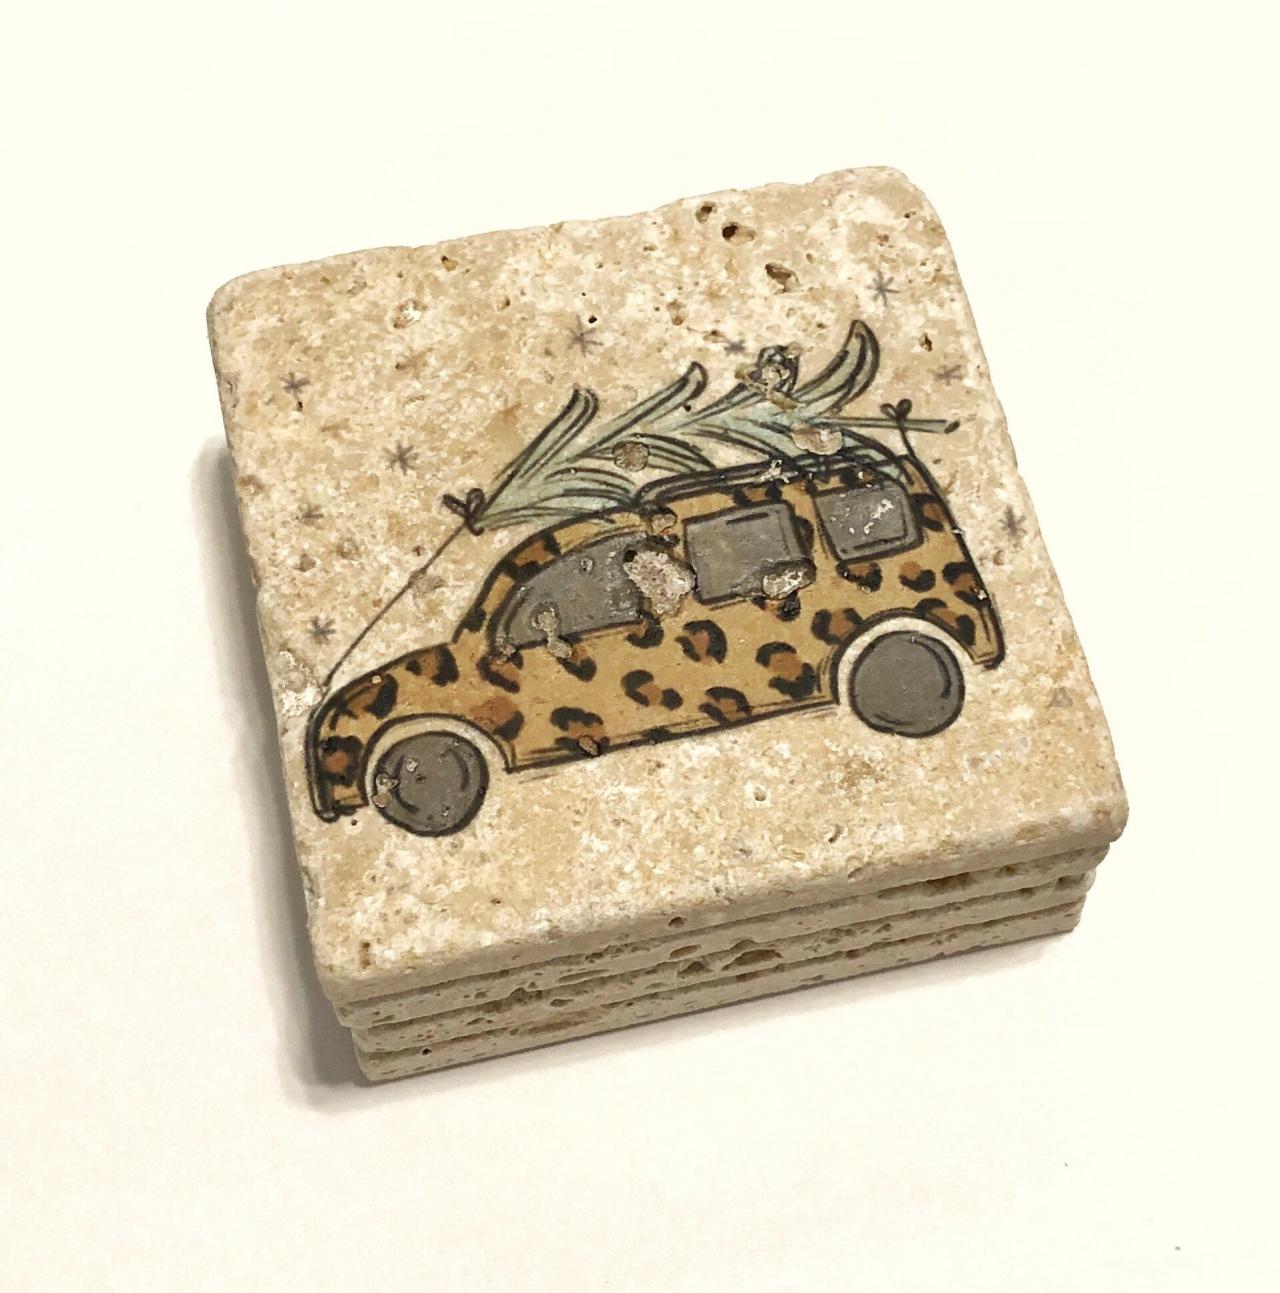 Cheetah Print Car With Christmas Tree, Natural Stone Coasters Set Of 4, Christmas Coasters, Holiday Decor